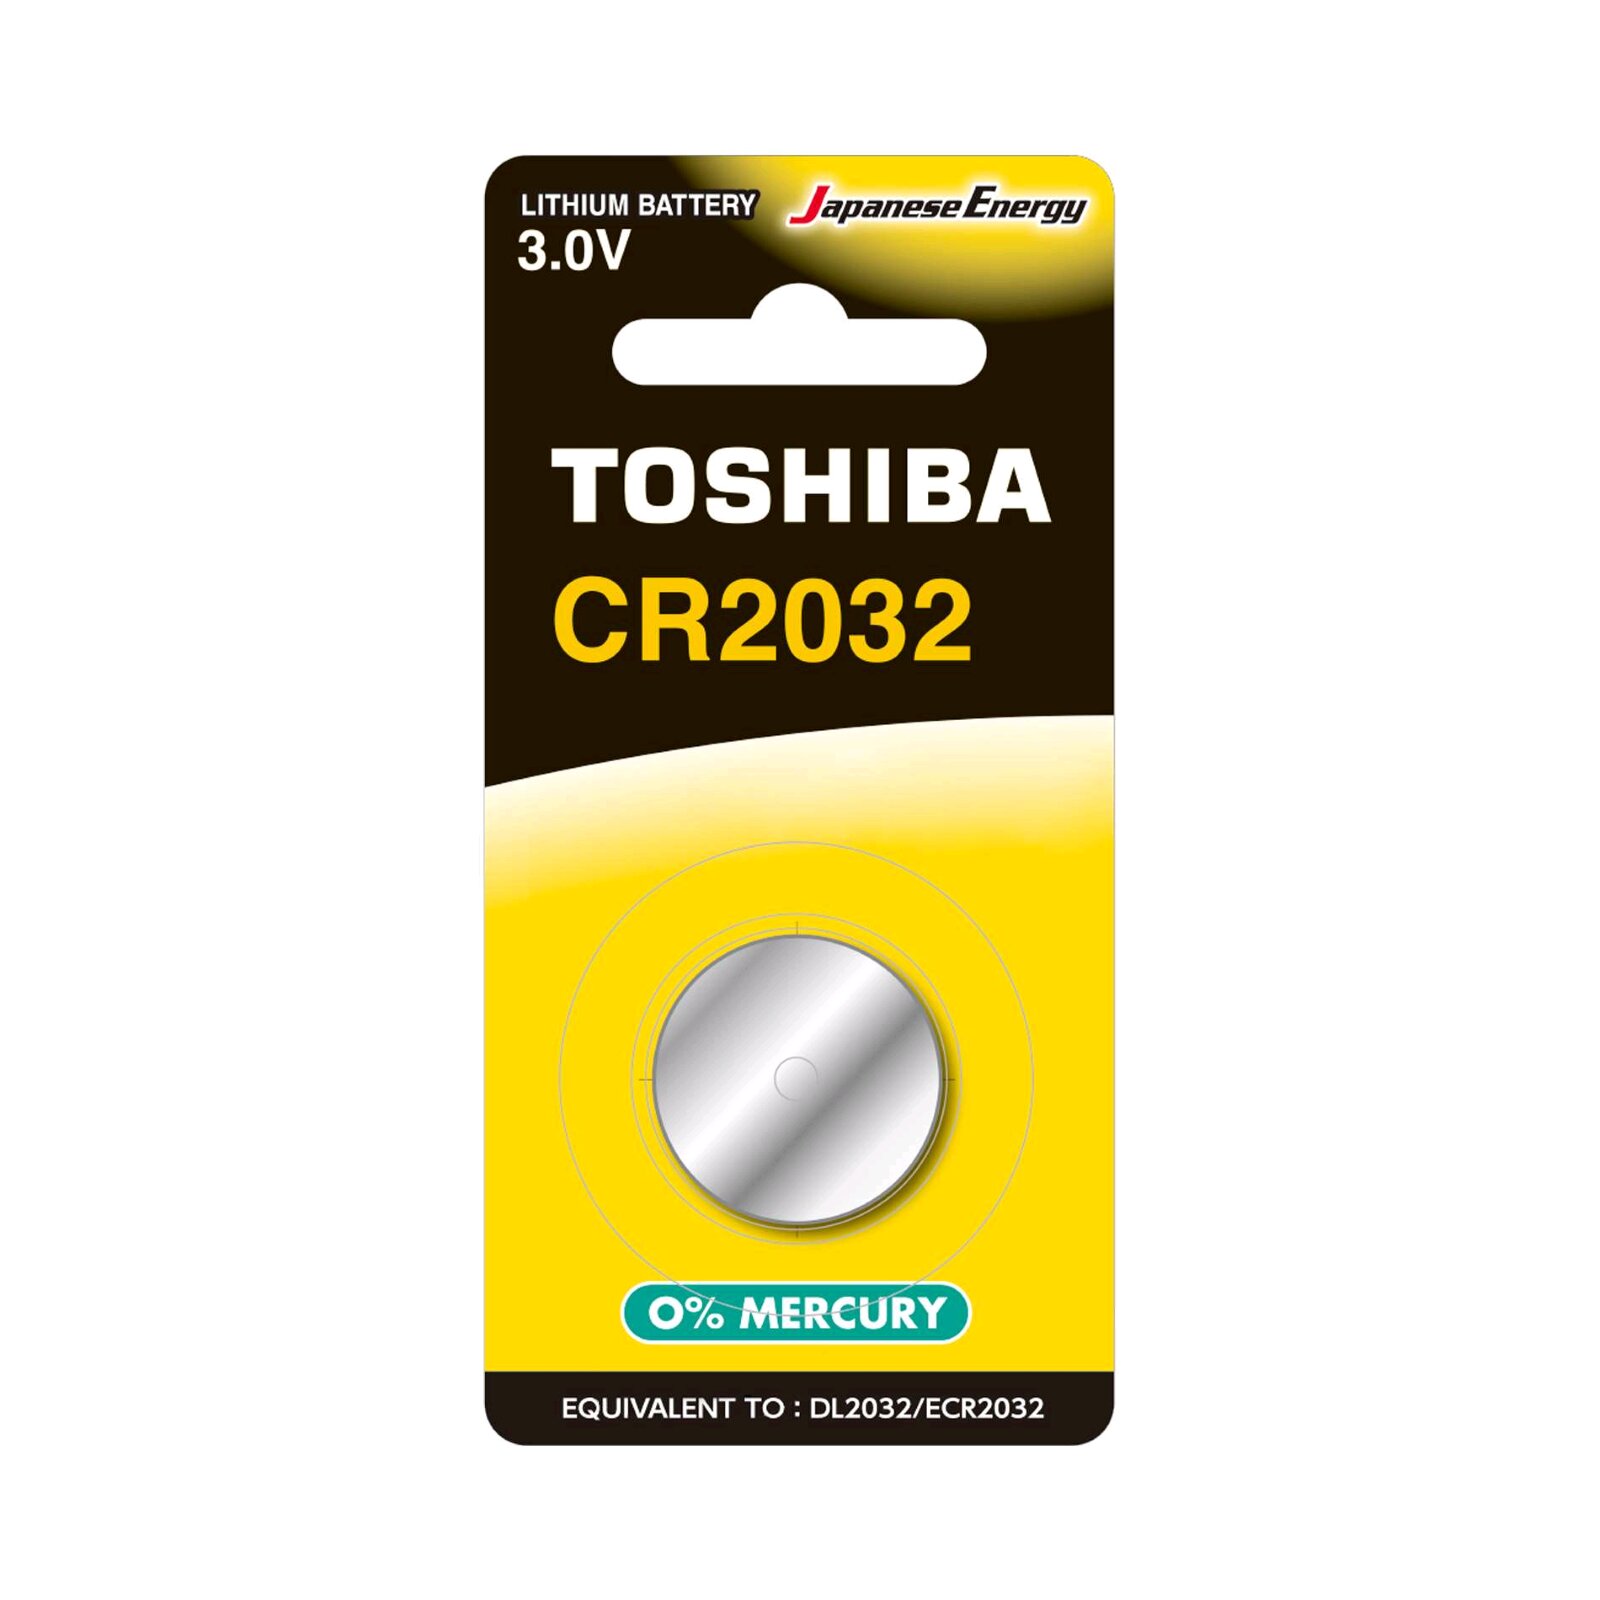 Toshiba CR2032 BP-1C Battery CR2032 - Pack of 1 : photo 1